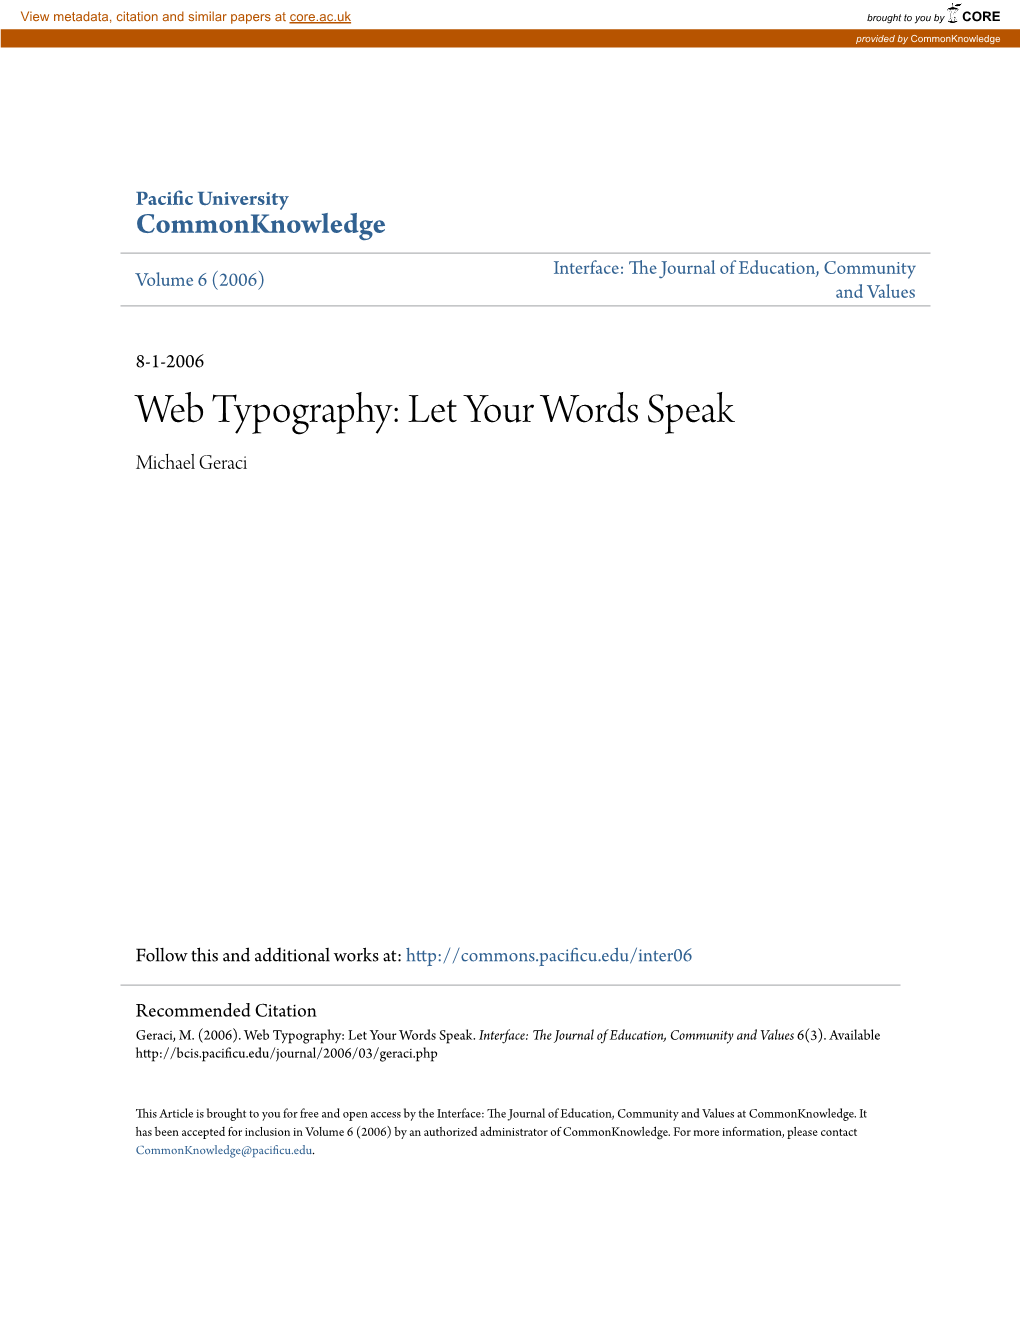 Web Typography: Let Your Words Speak Michael Geraci